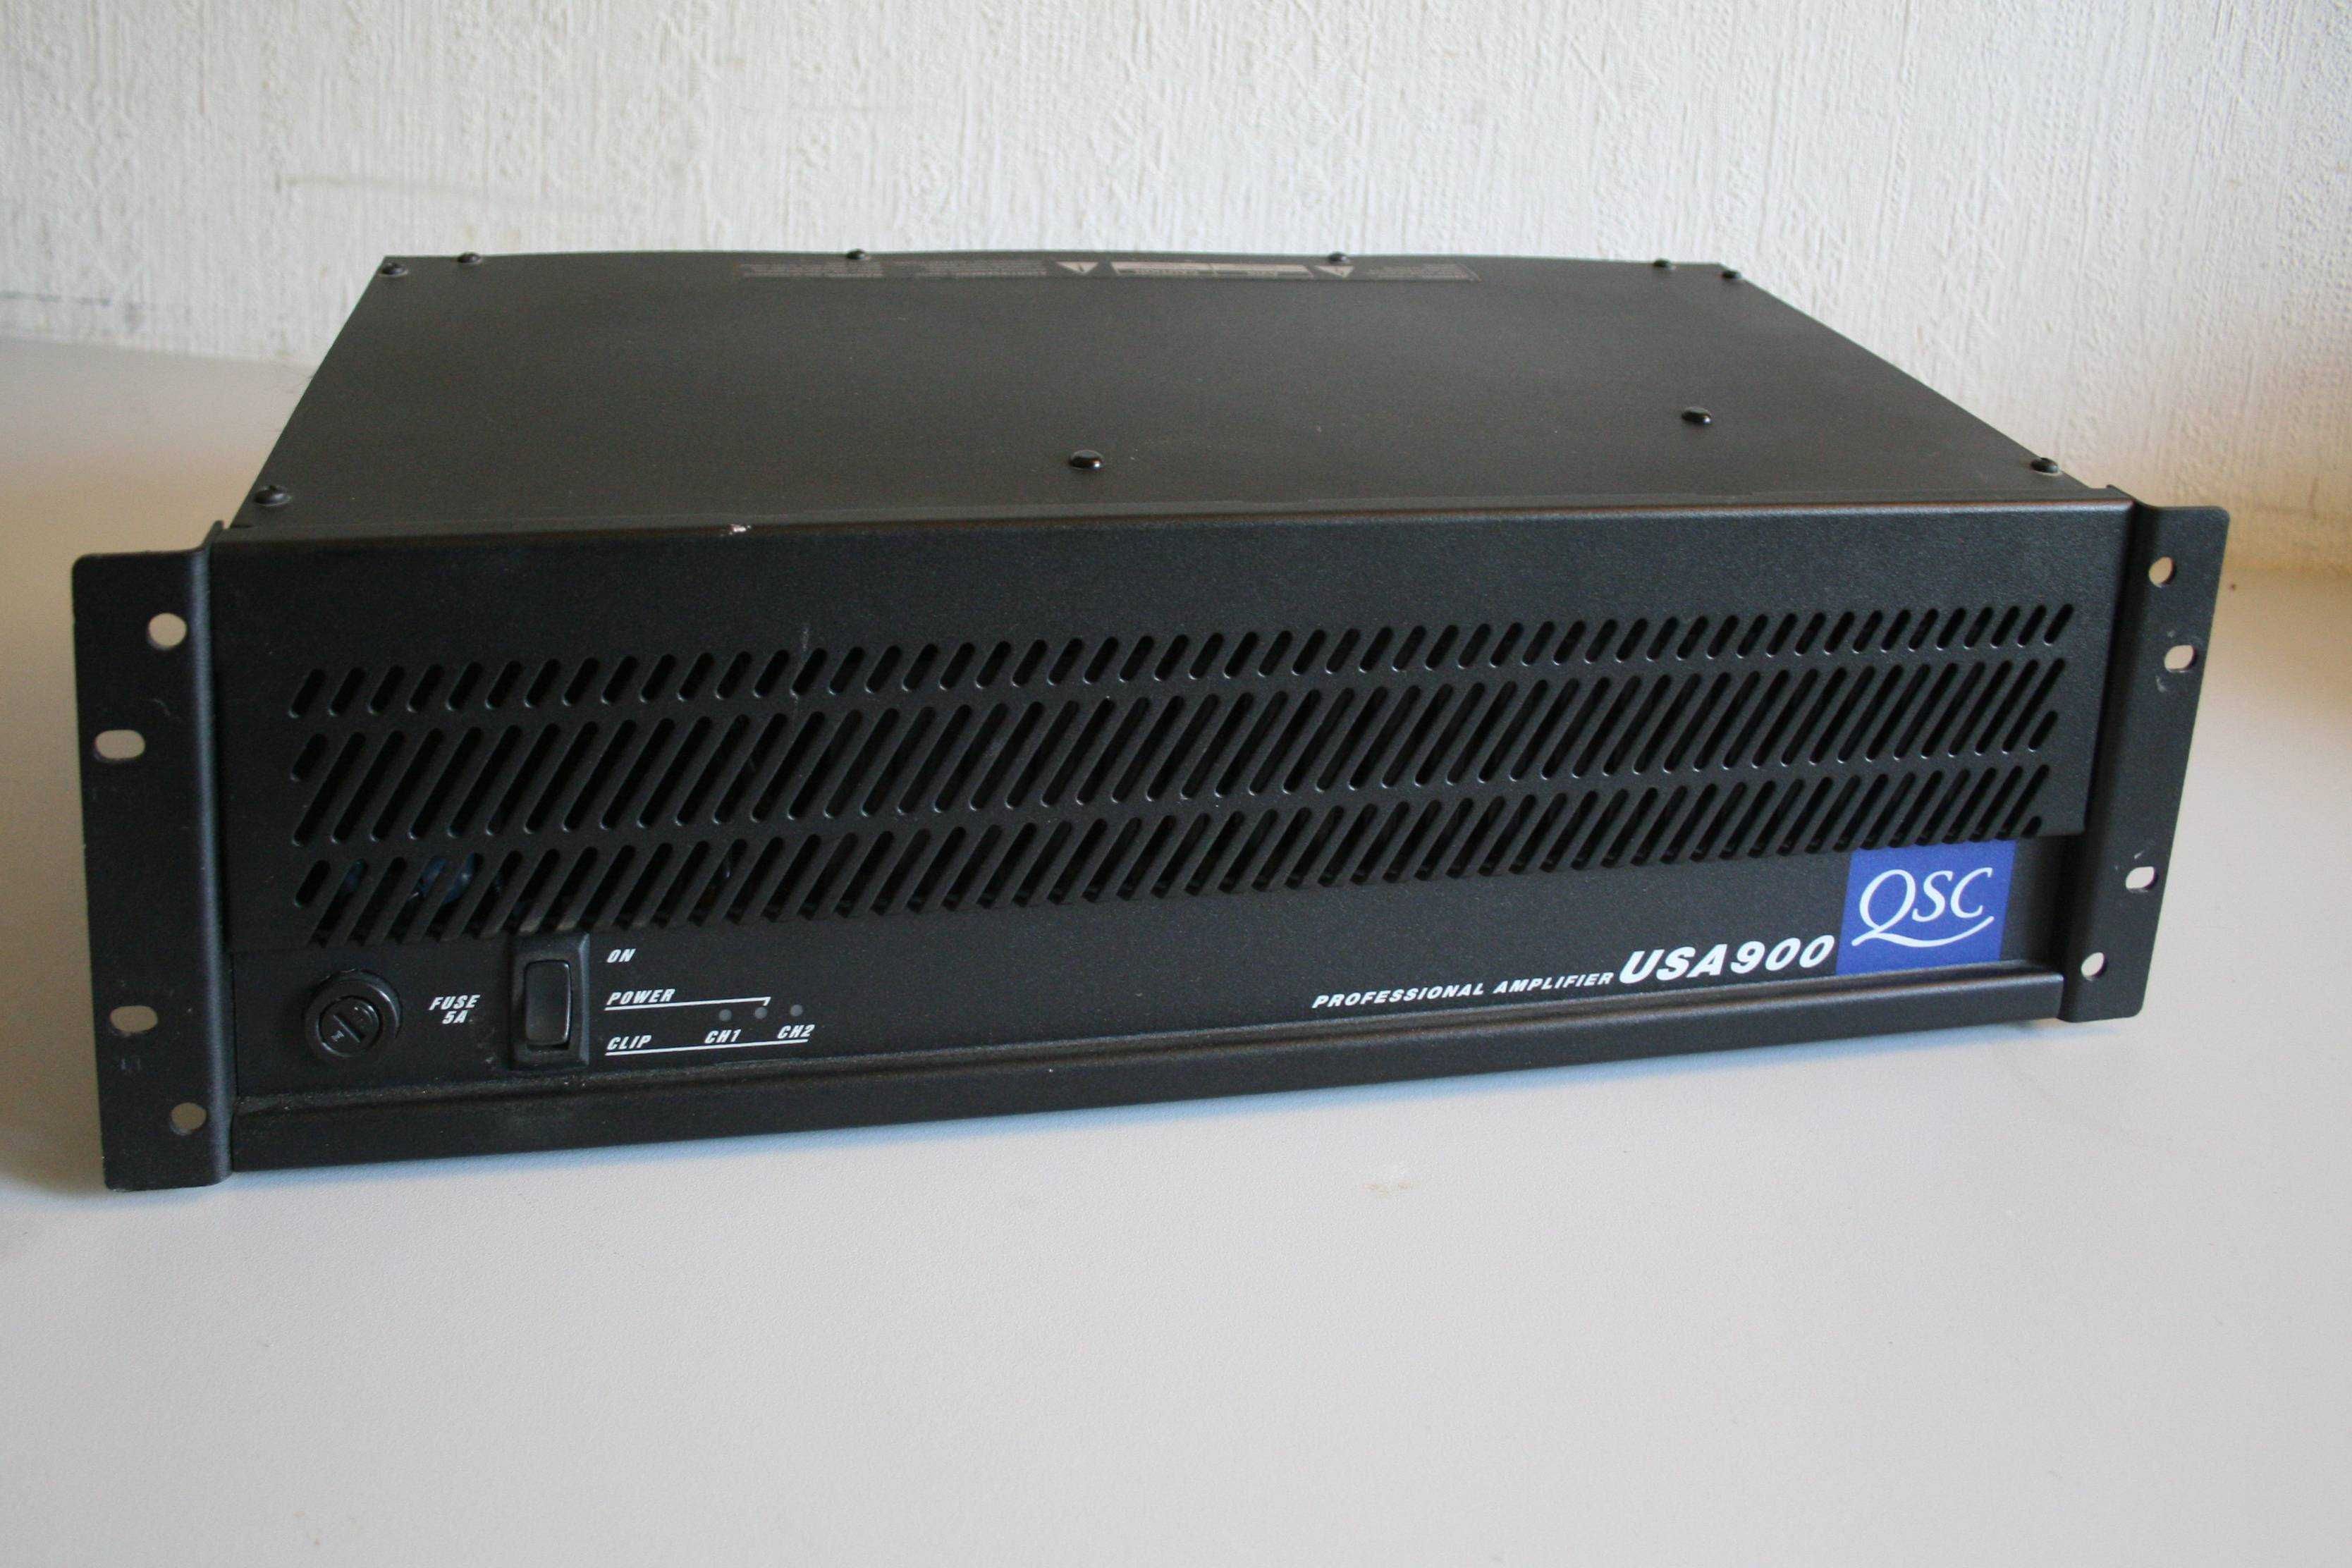 Amplificator sunet profesional QSC USA 900, 240W stereo / 900W mono